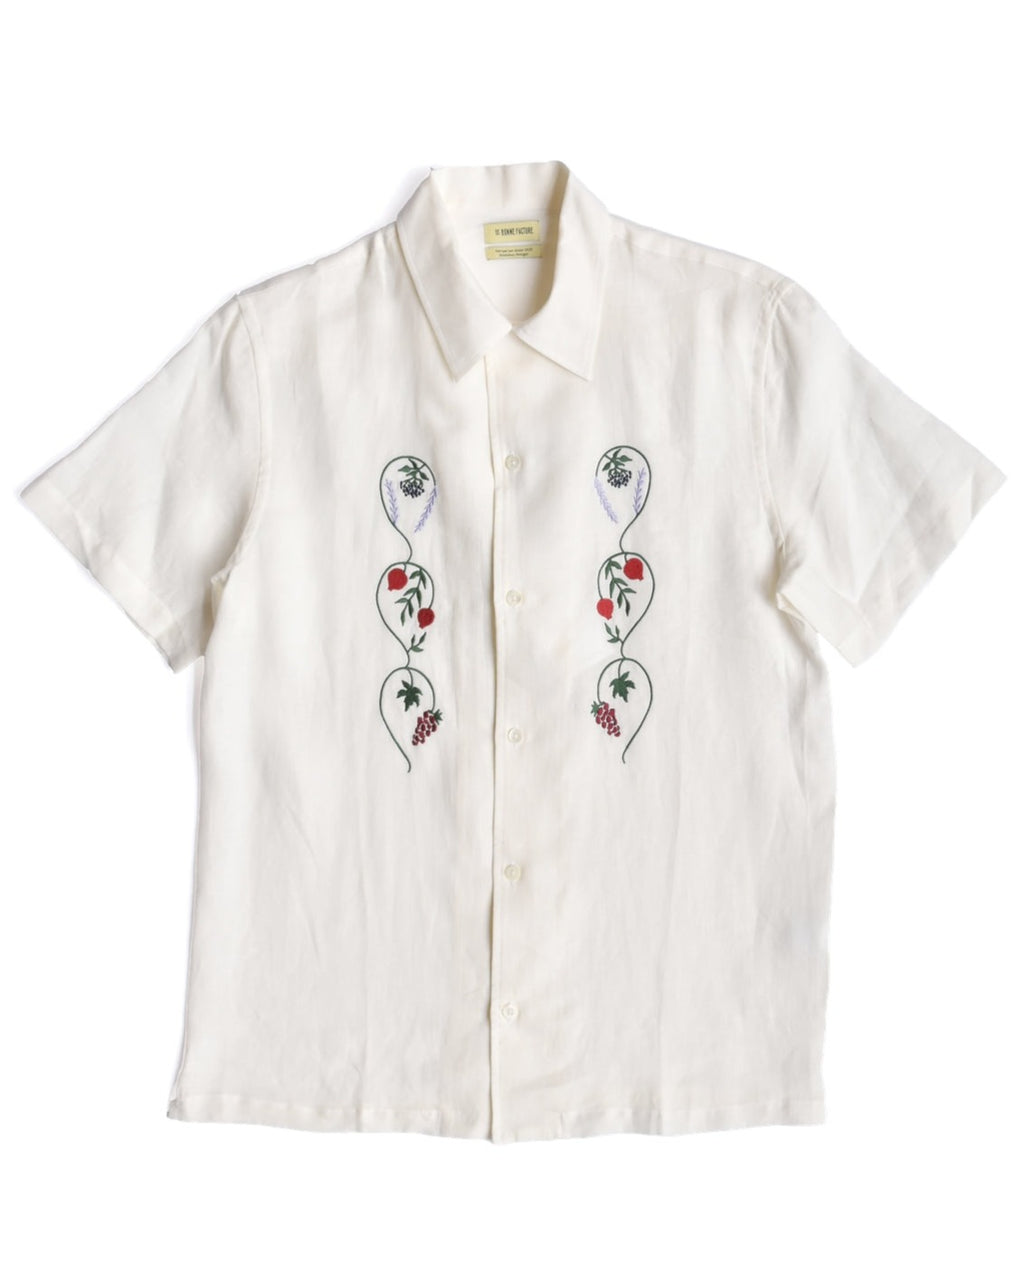 De Bonne Facture Embroidered White Linen Camp Shirt